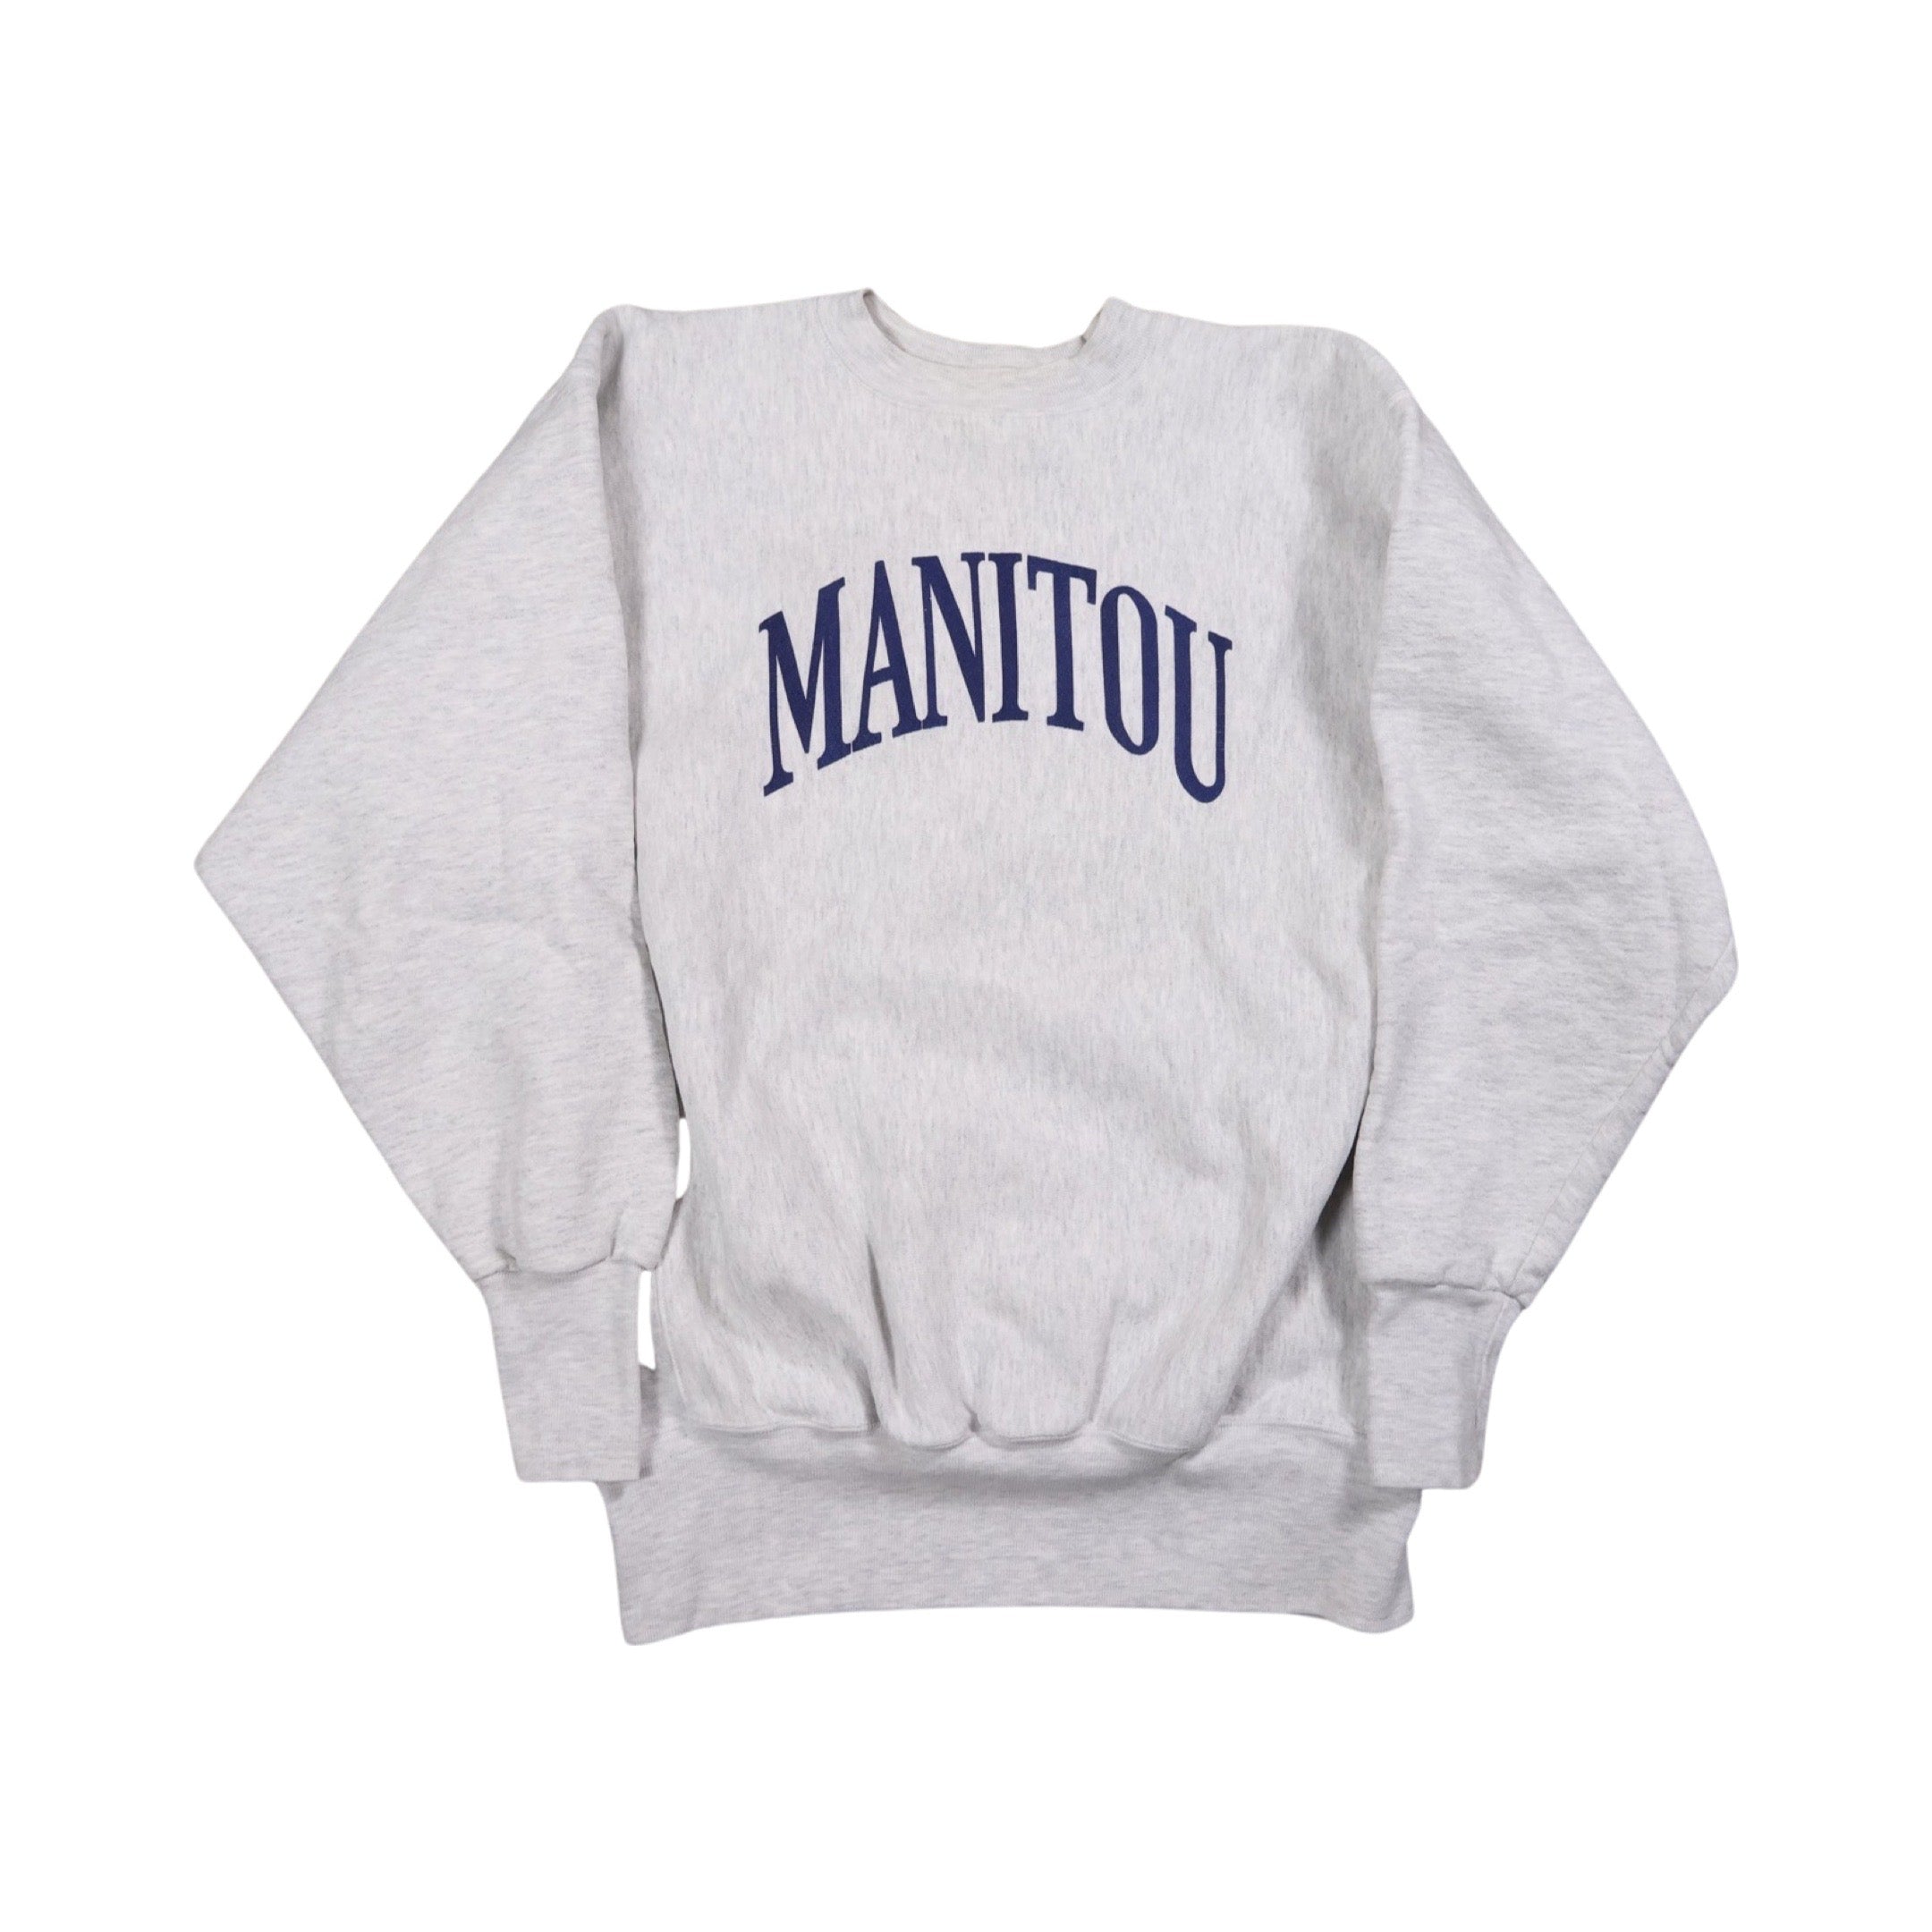 Manitou 90s Sweater (Large)